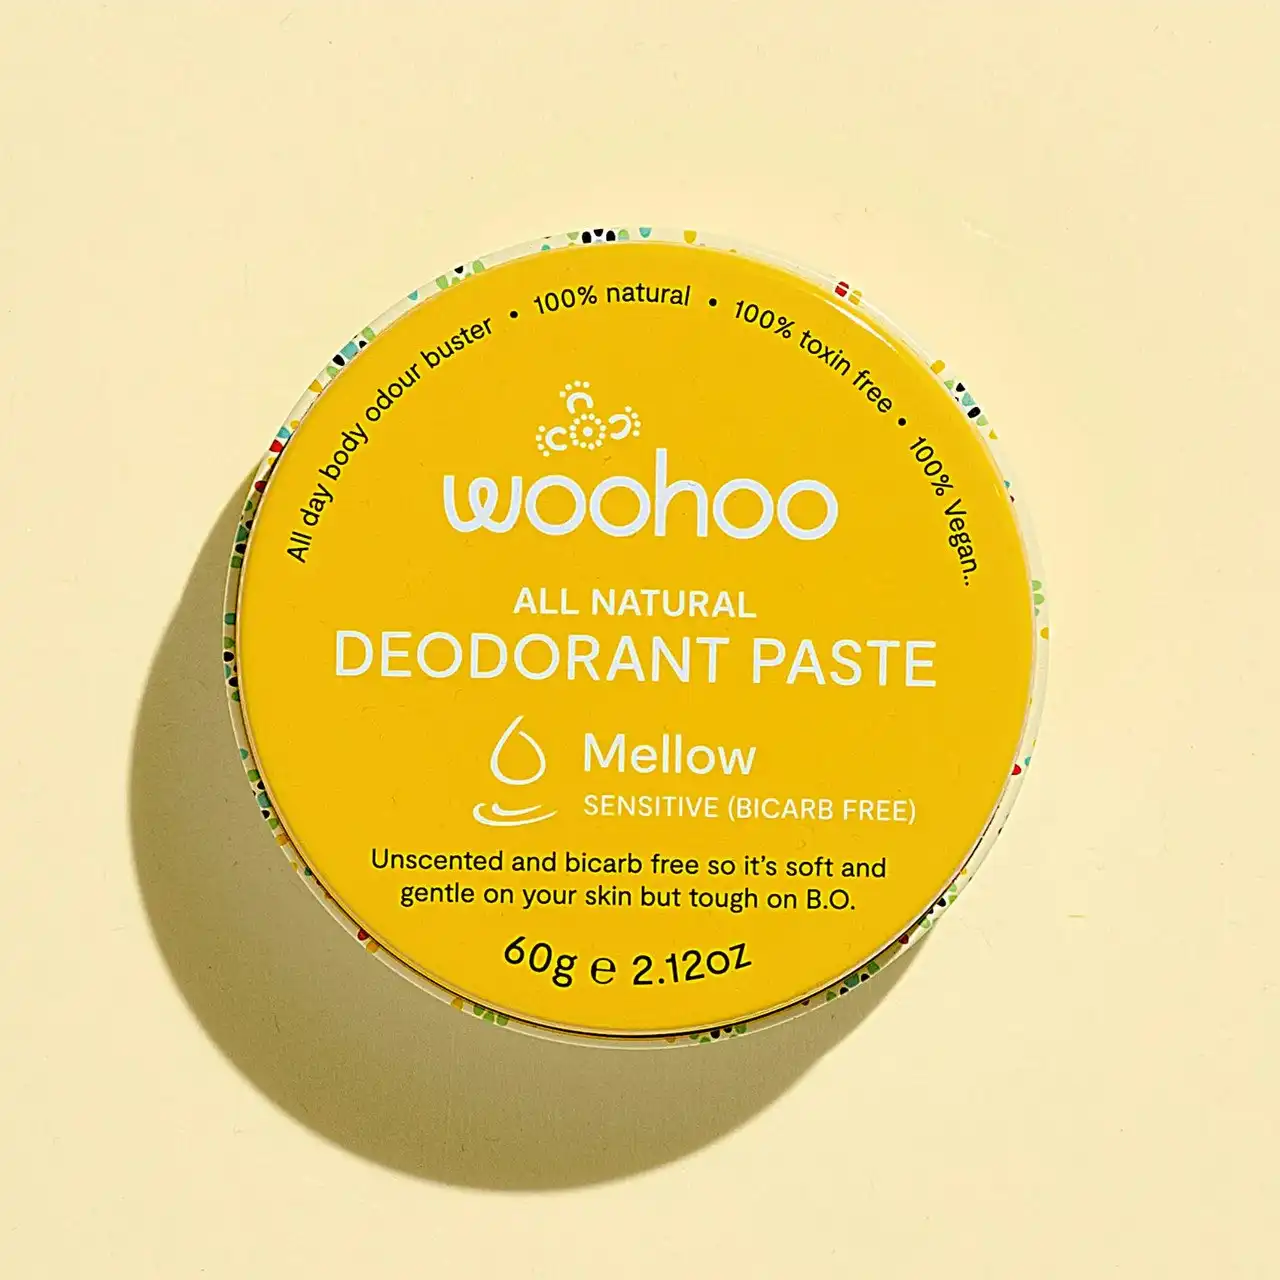 Woohoo All Natural Deodorant Paste Mellow 60g